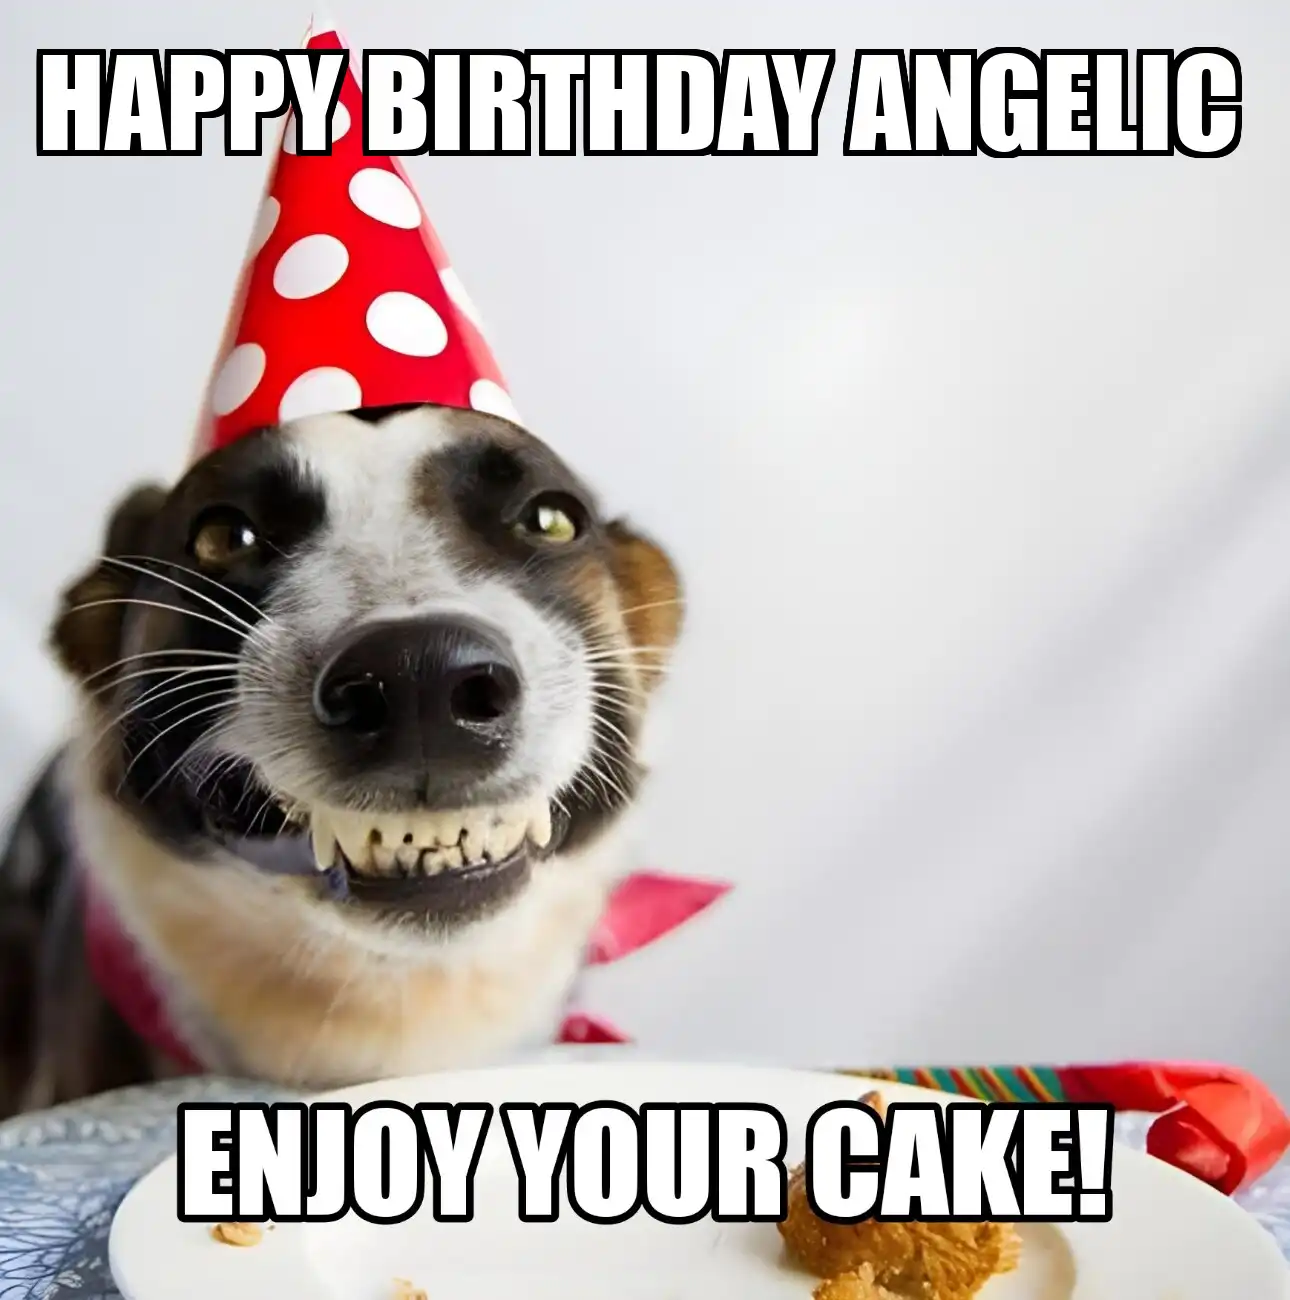 Happy Birthday Angelic Enjoy Your Cake Dog Meme